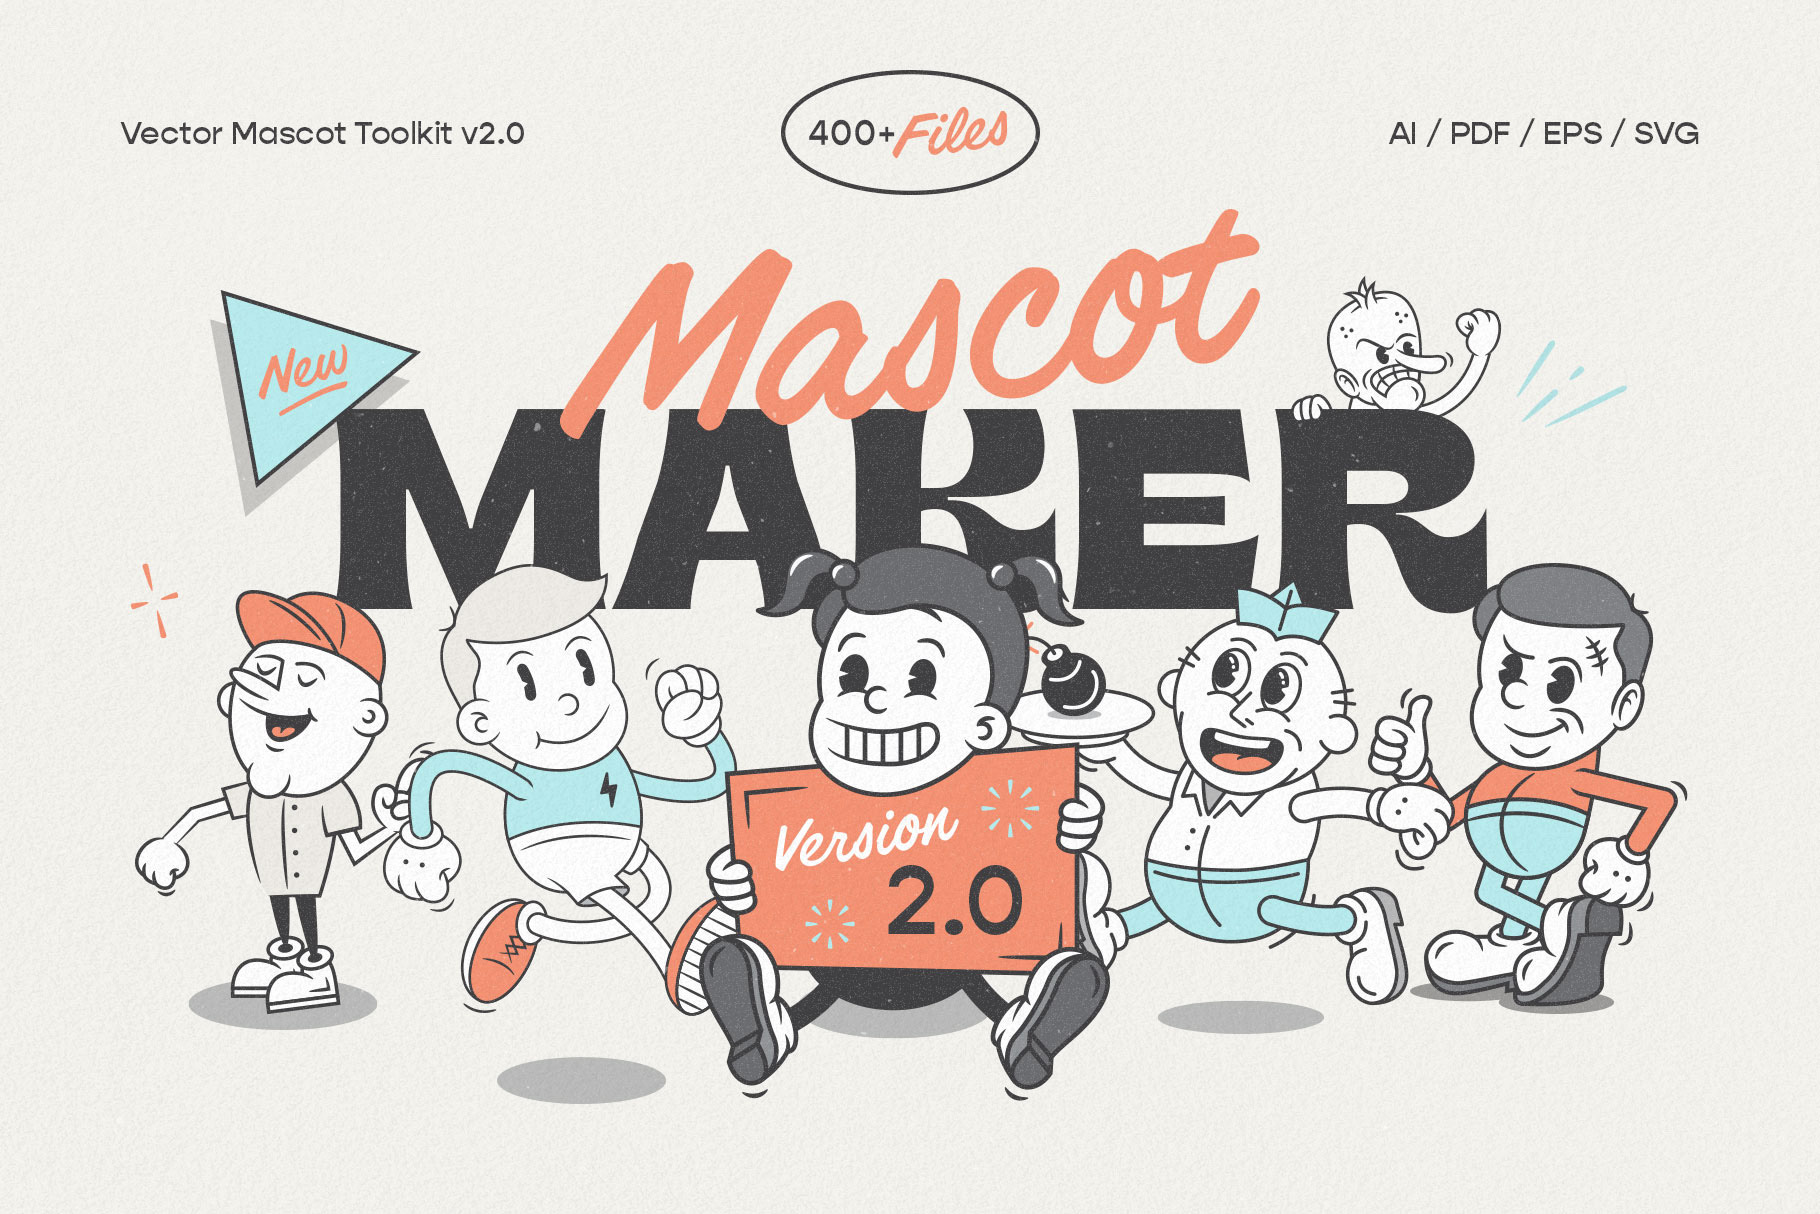 Mascot Maker - Personal rendition image